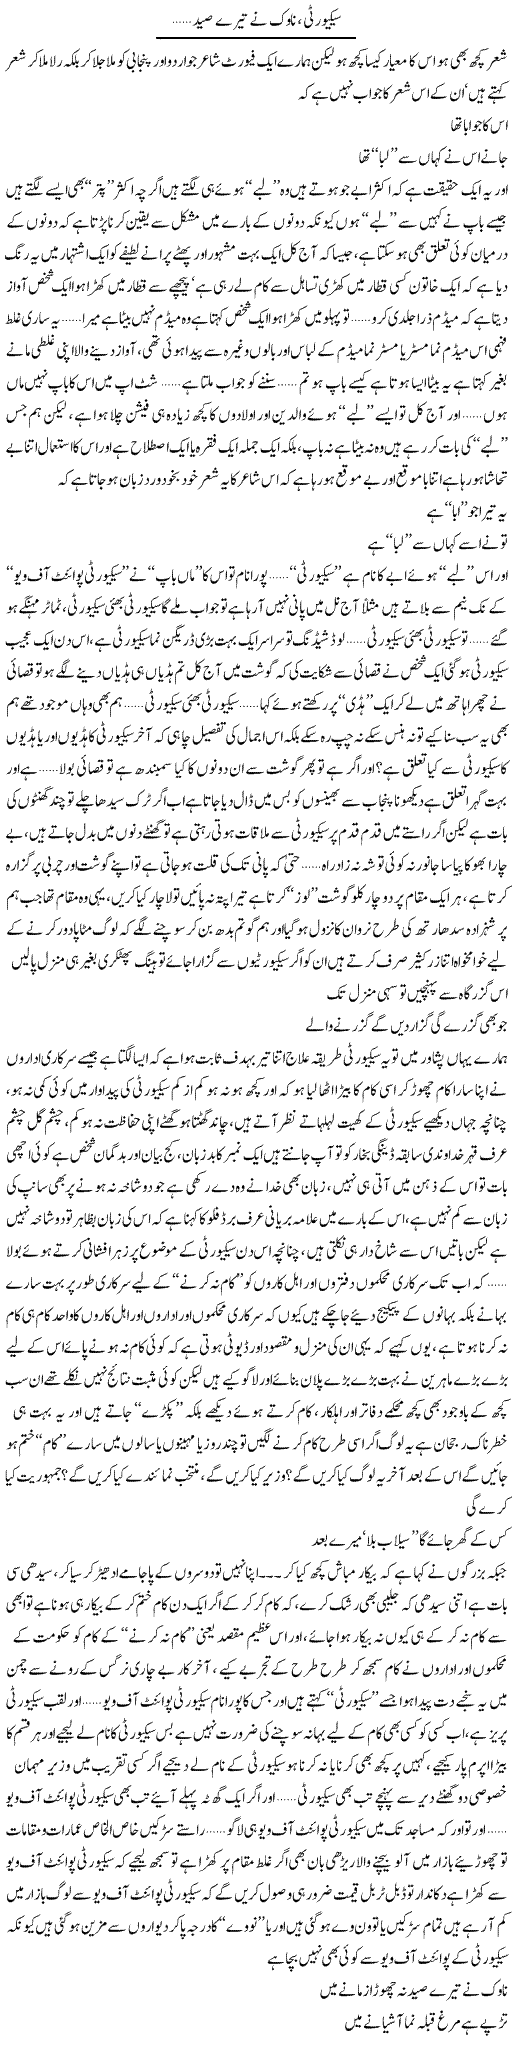 Security, Navak Ney Tere Saed | Saad Ullah Jan Barq | Daily Urdu Columns